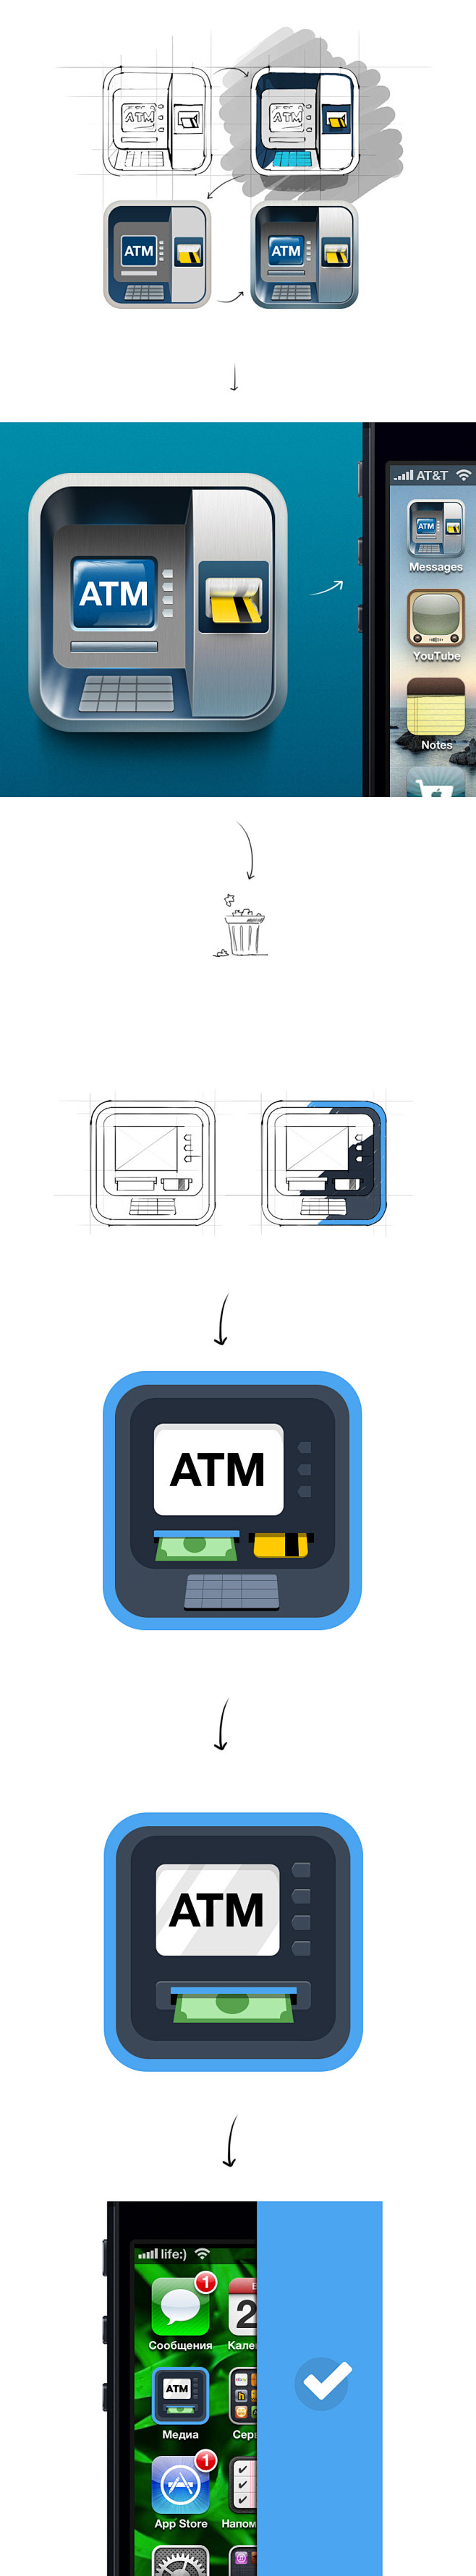 ATM图标设计制作过程
http://w...